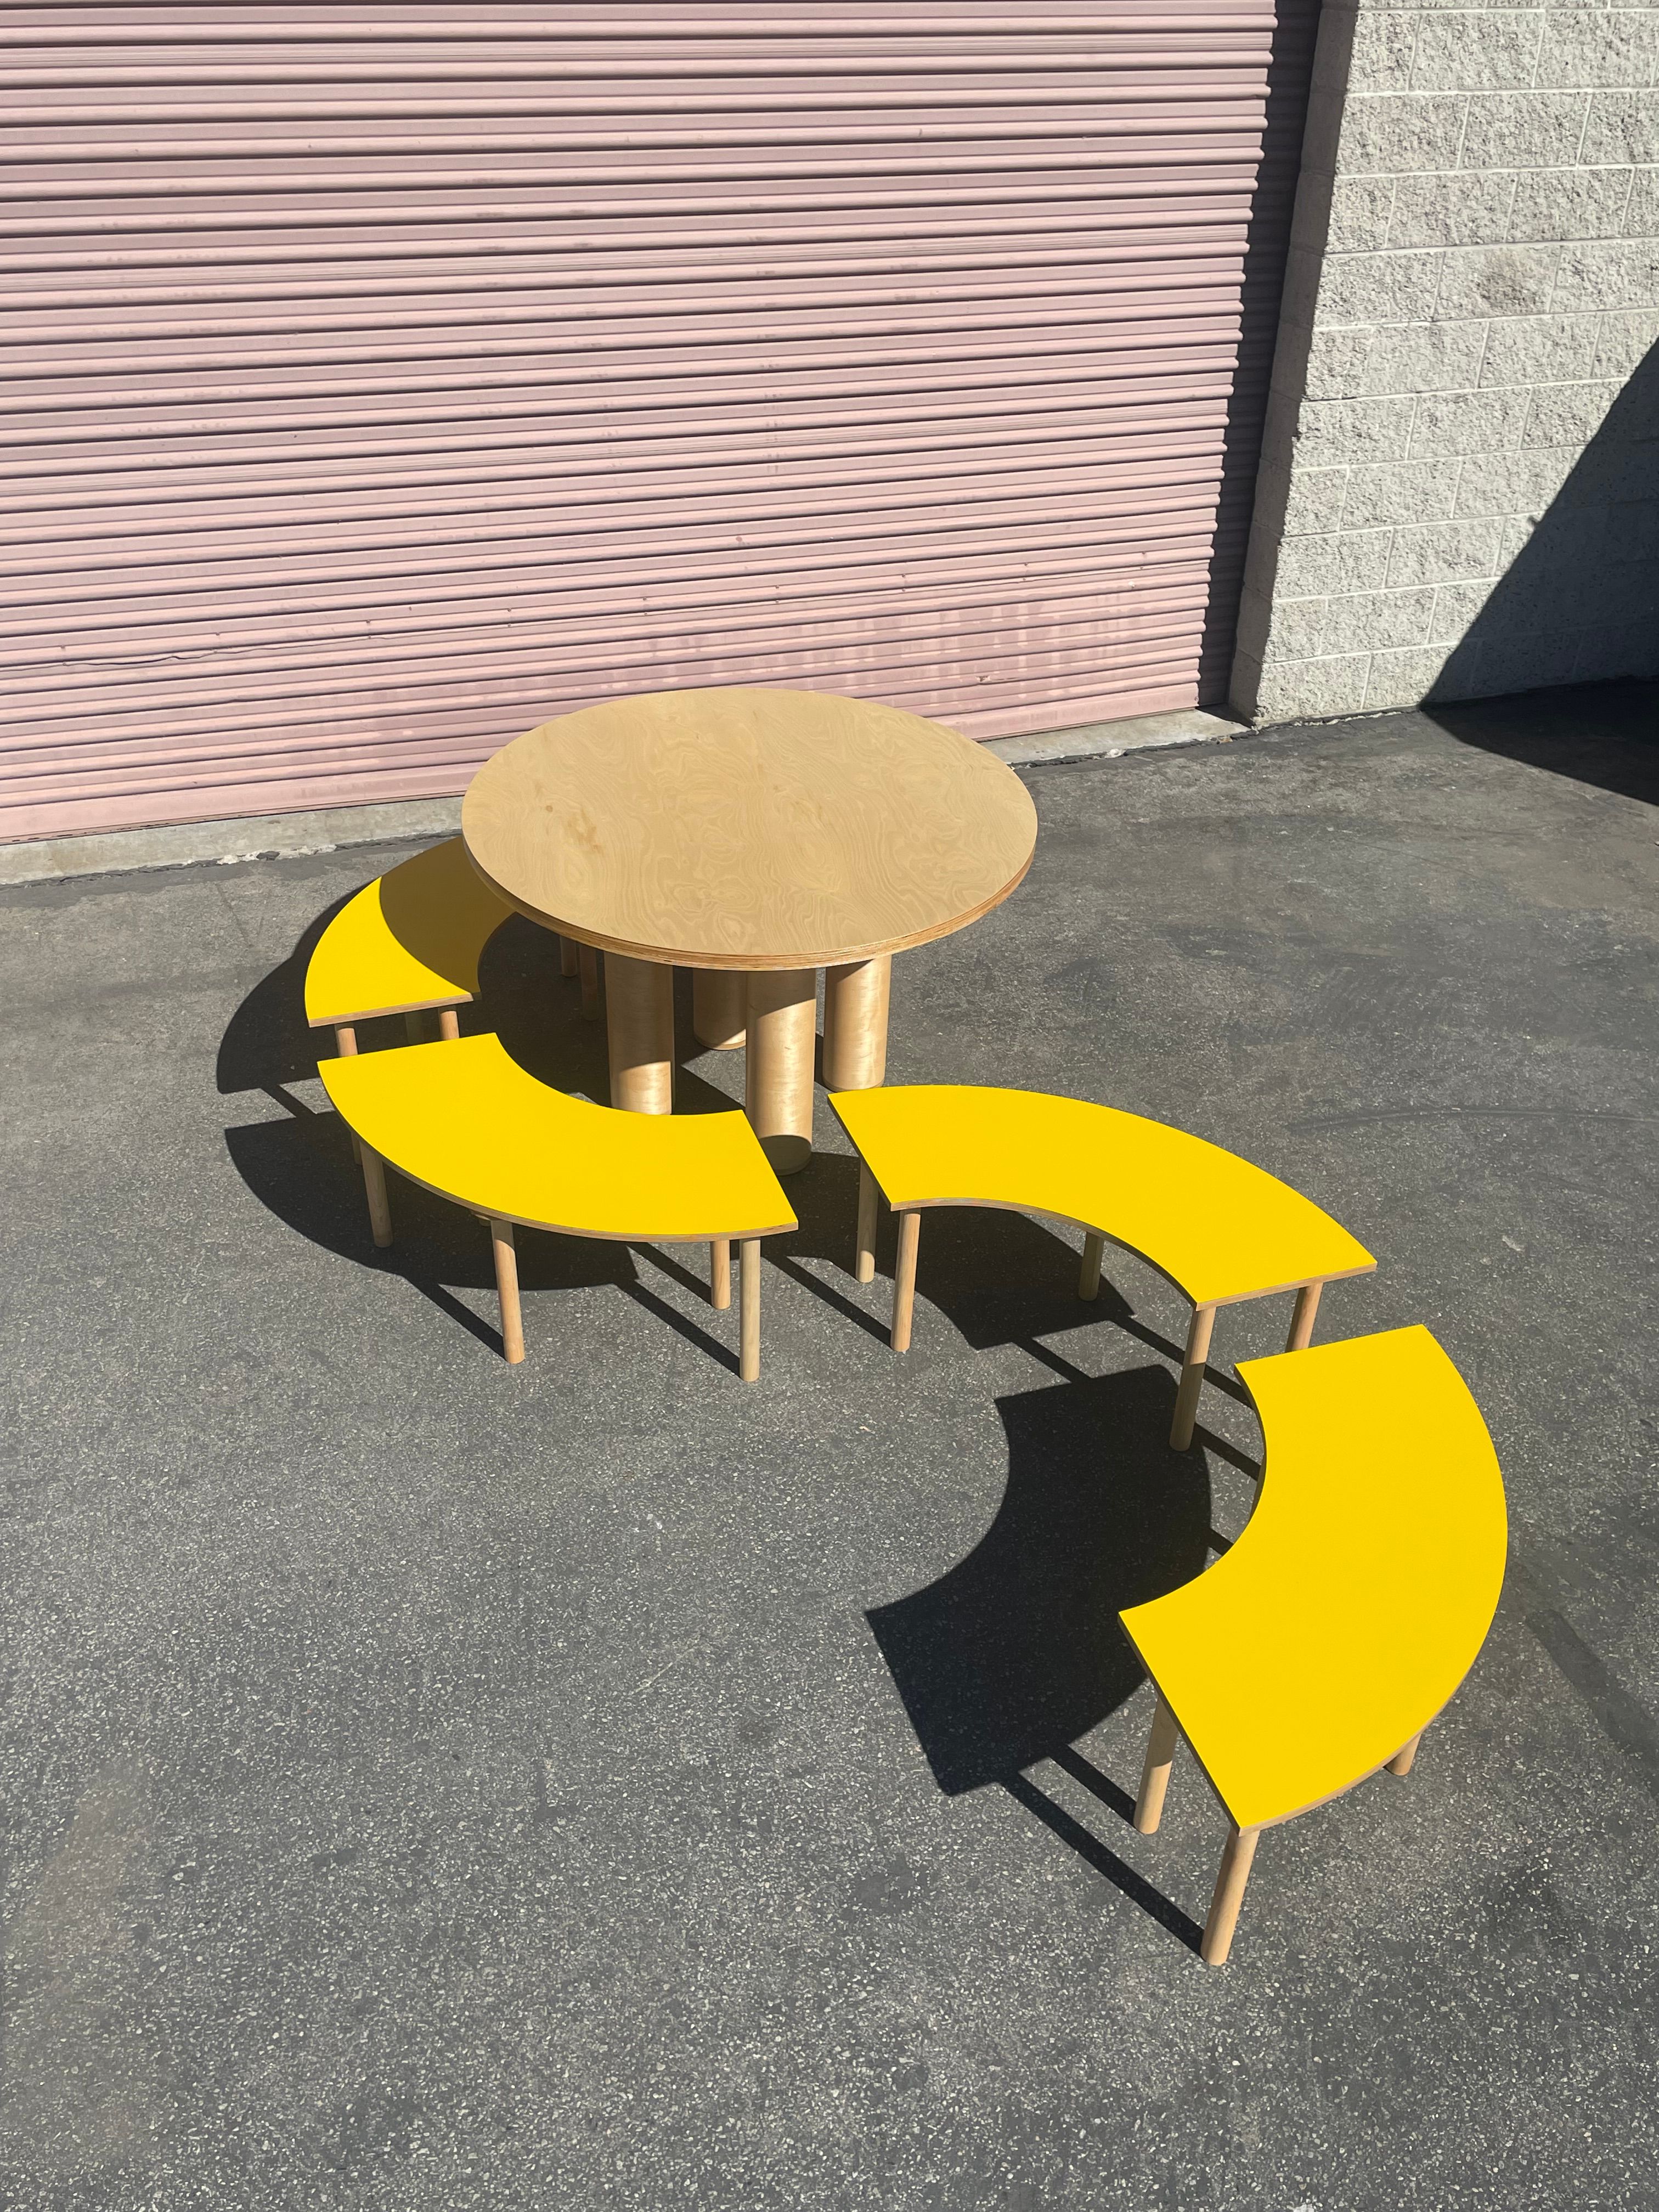  Circle Table + Bench Set II product image 4